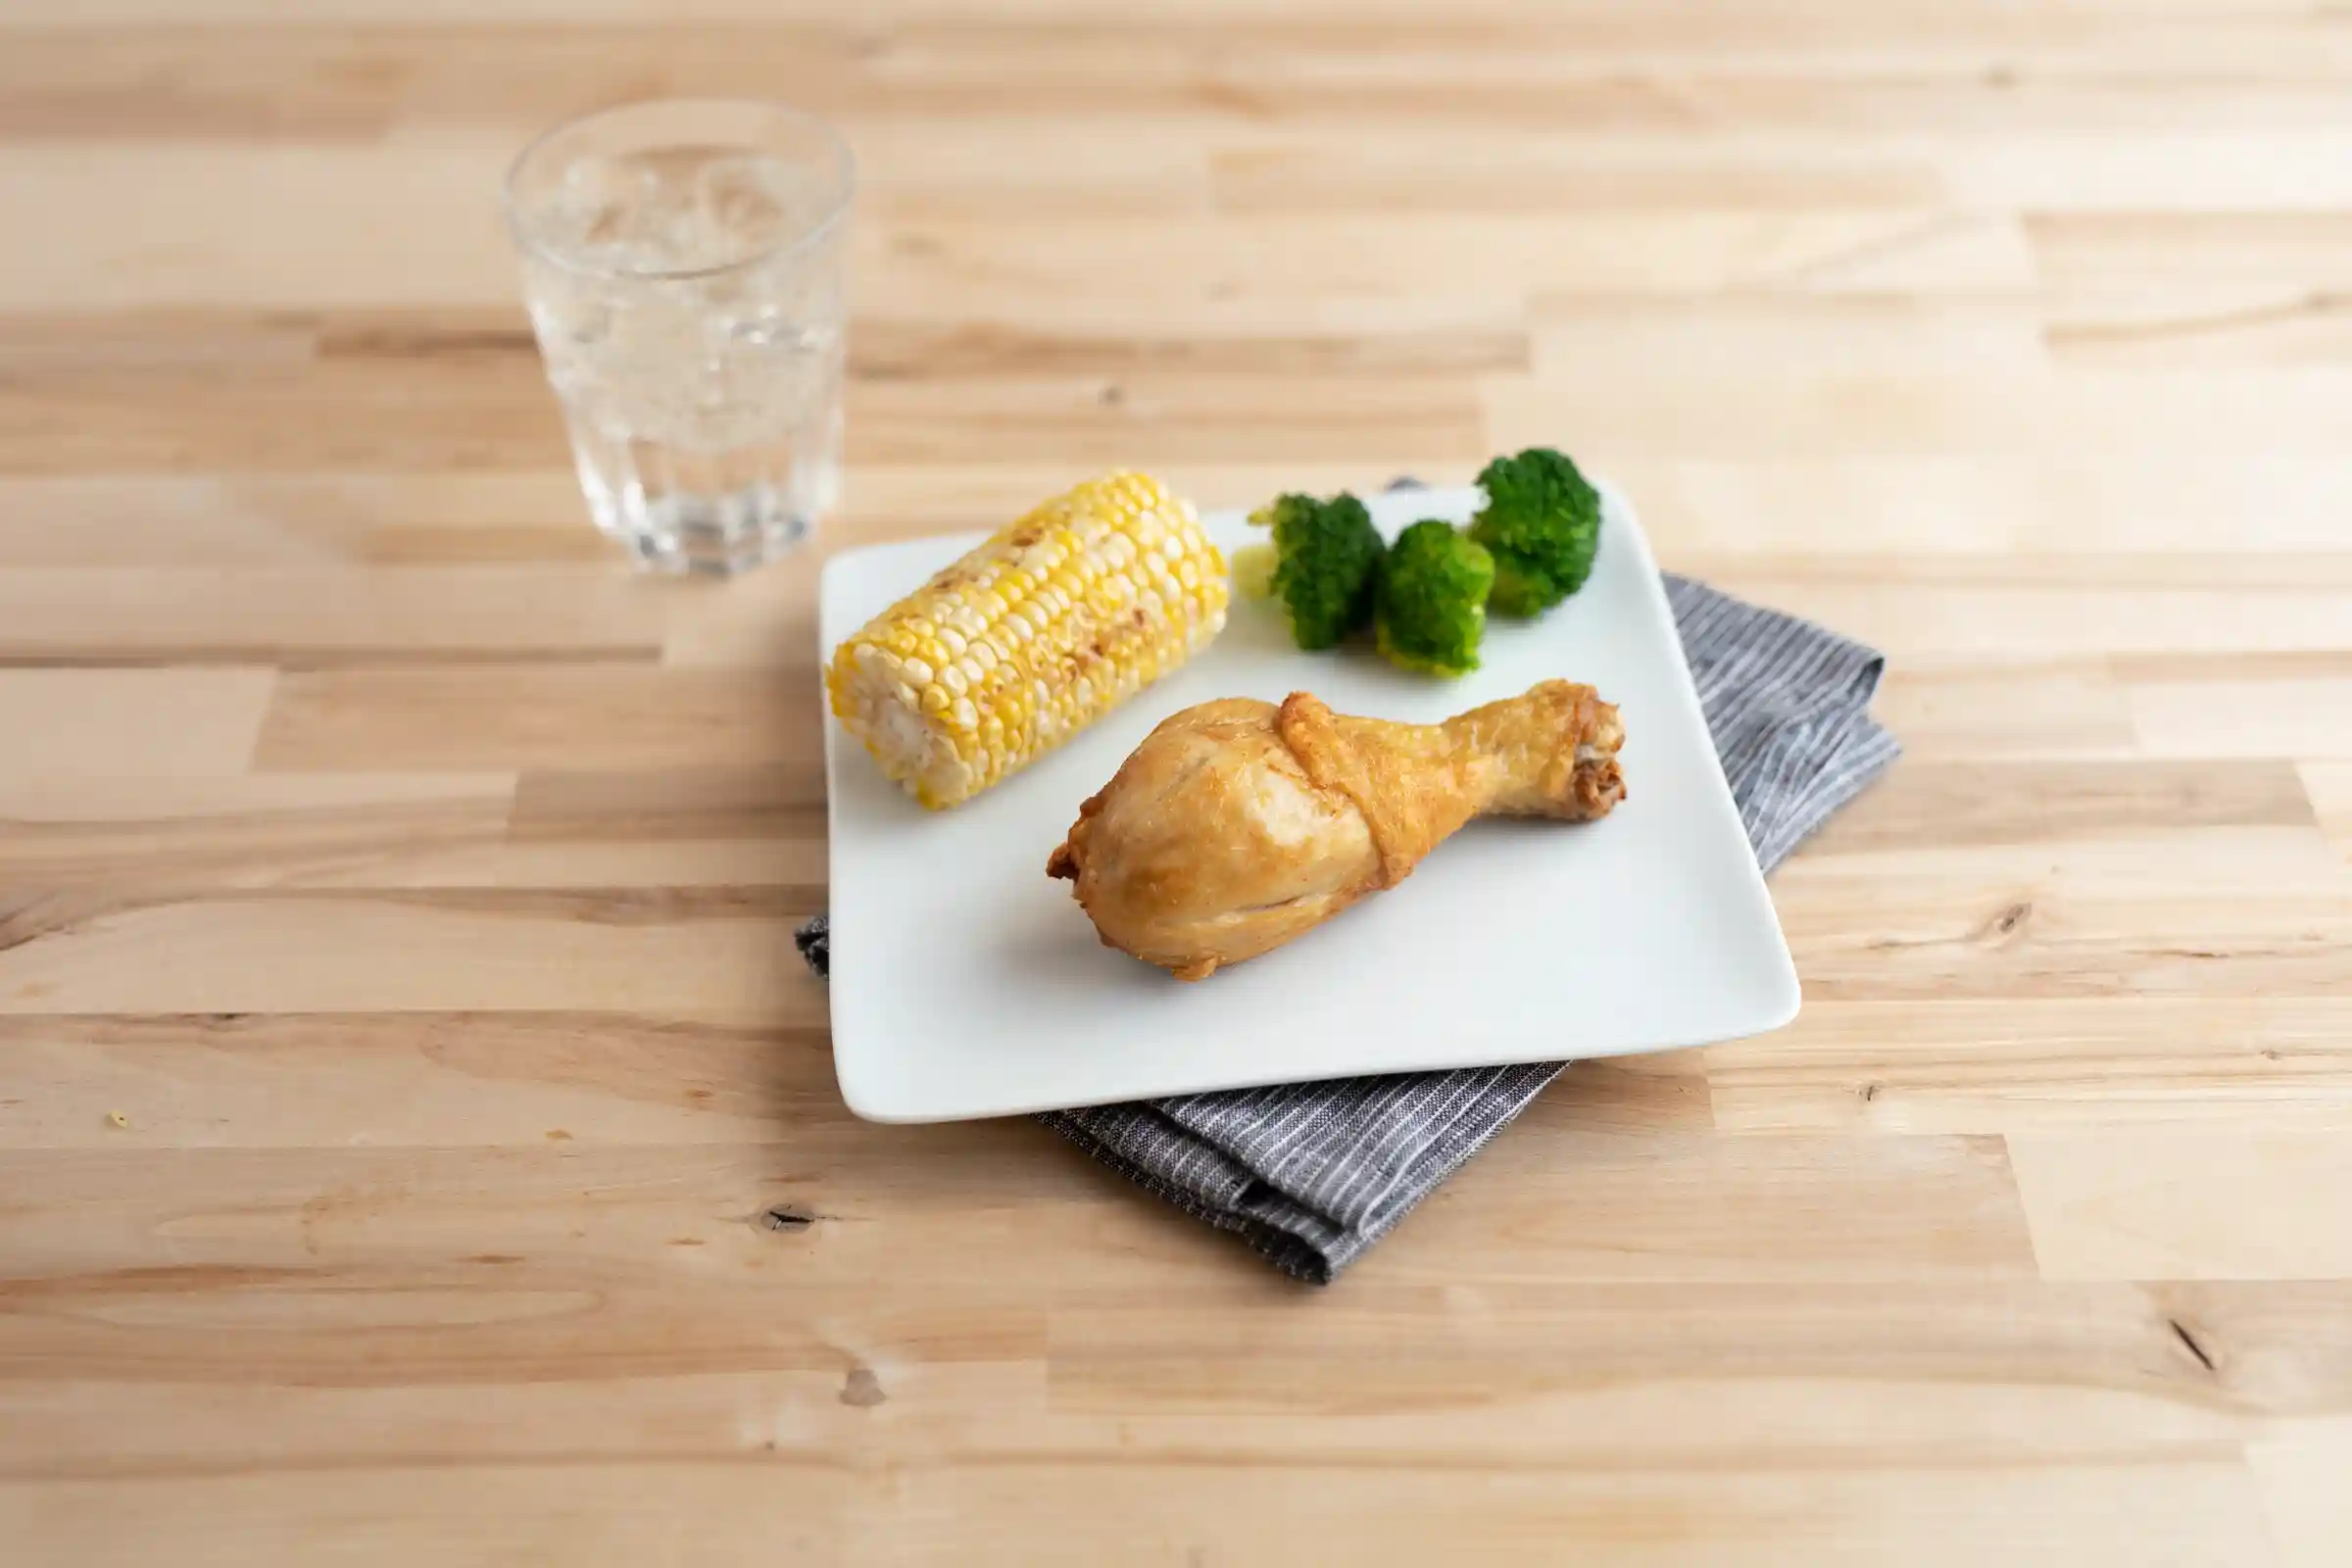 Tyson® Fully Cooked Glazed Chicken Drumsticks https://images.salsify.com/image/upload/s--r79wpytx--/q_25/rbjwcj3ykmb9hqogn6qx.webp